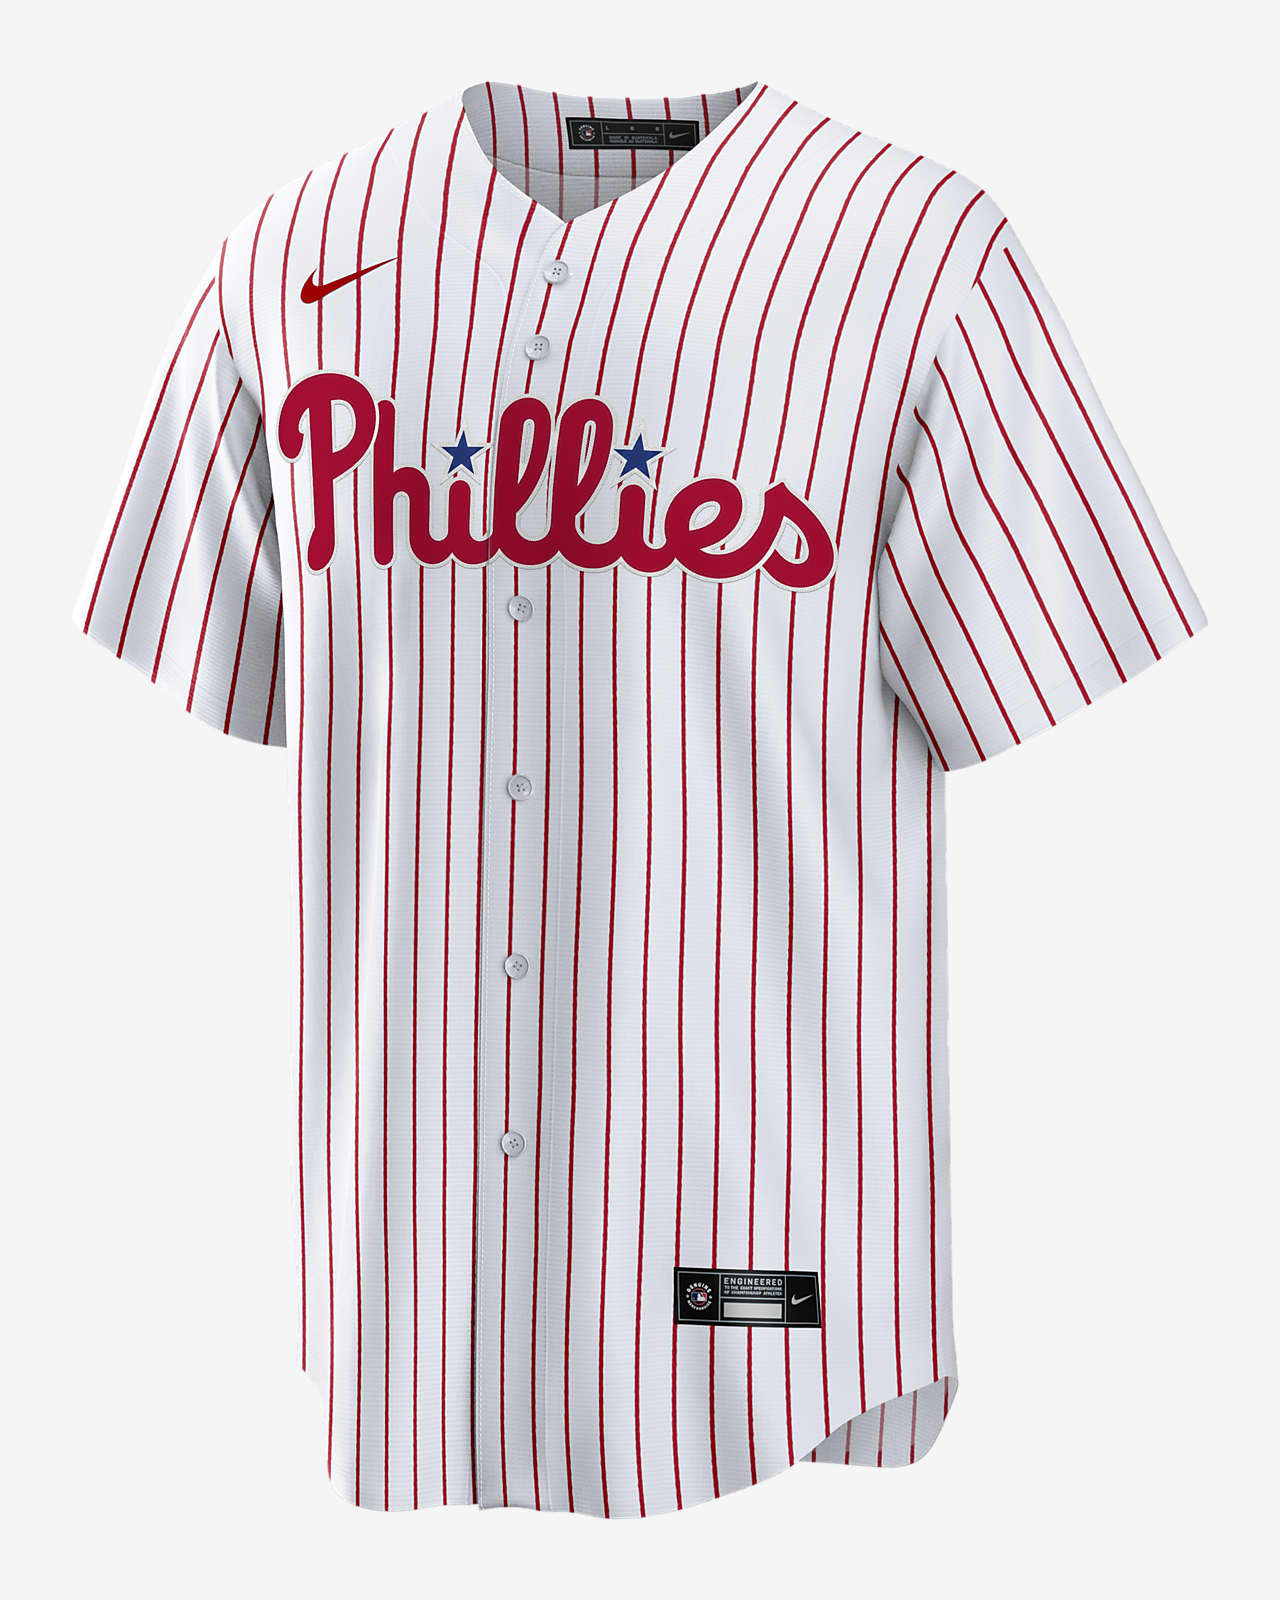 Phillies Uniforms  Philadelphia Phillies